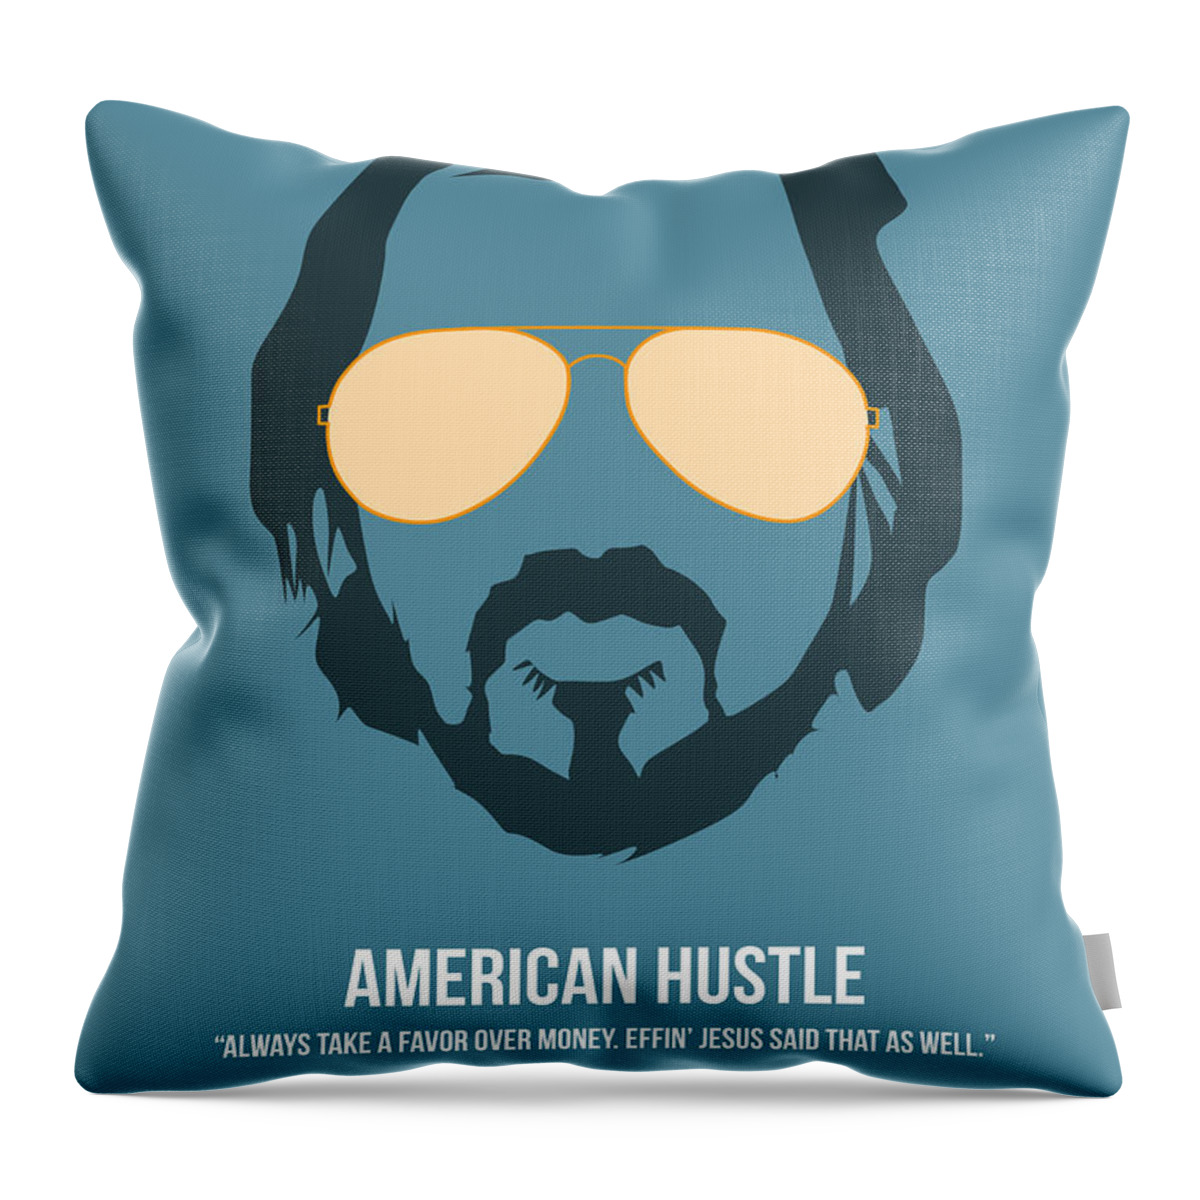 American Hustle Throw Pillow featuring the digital art American Hustle by Naxart Studio